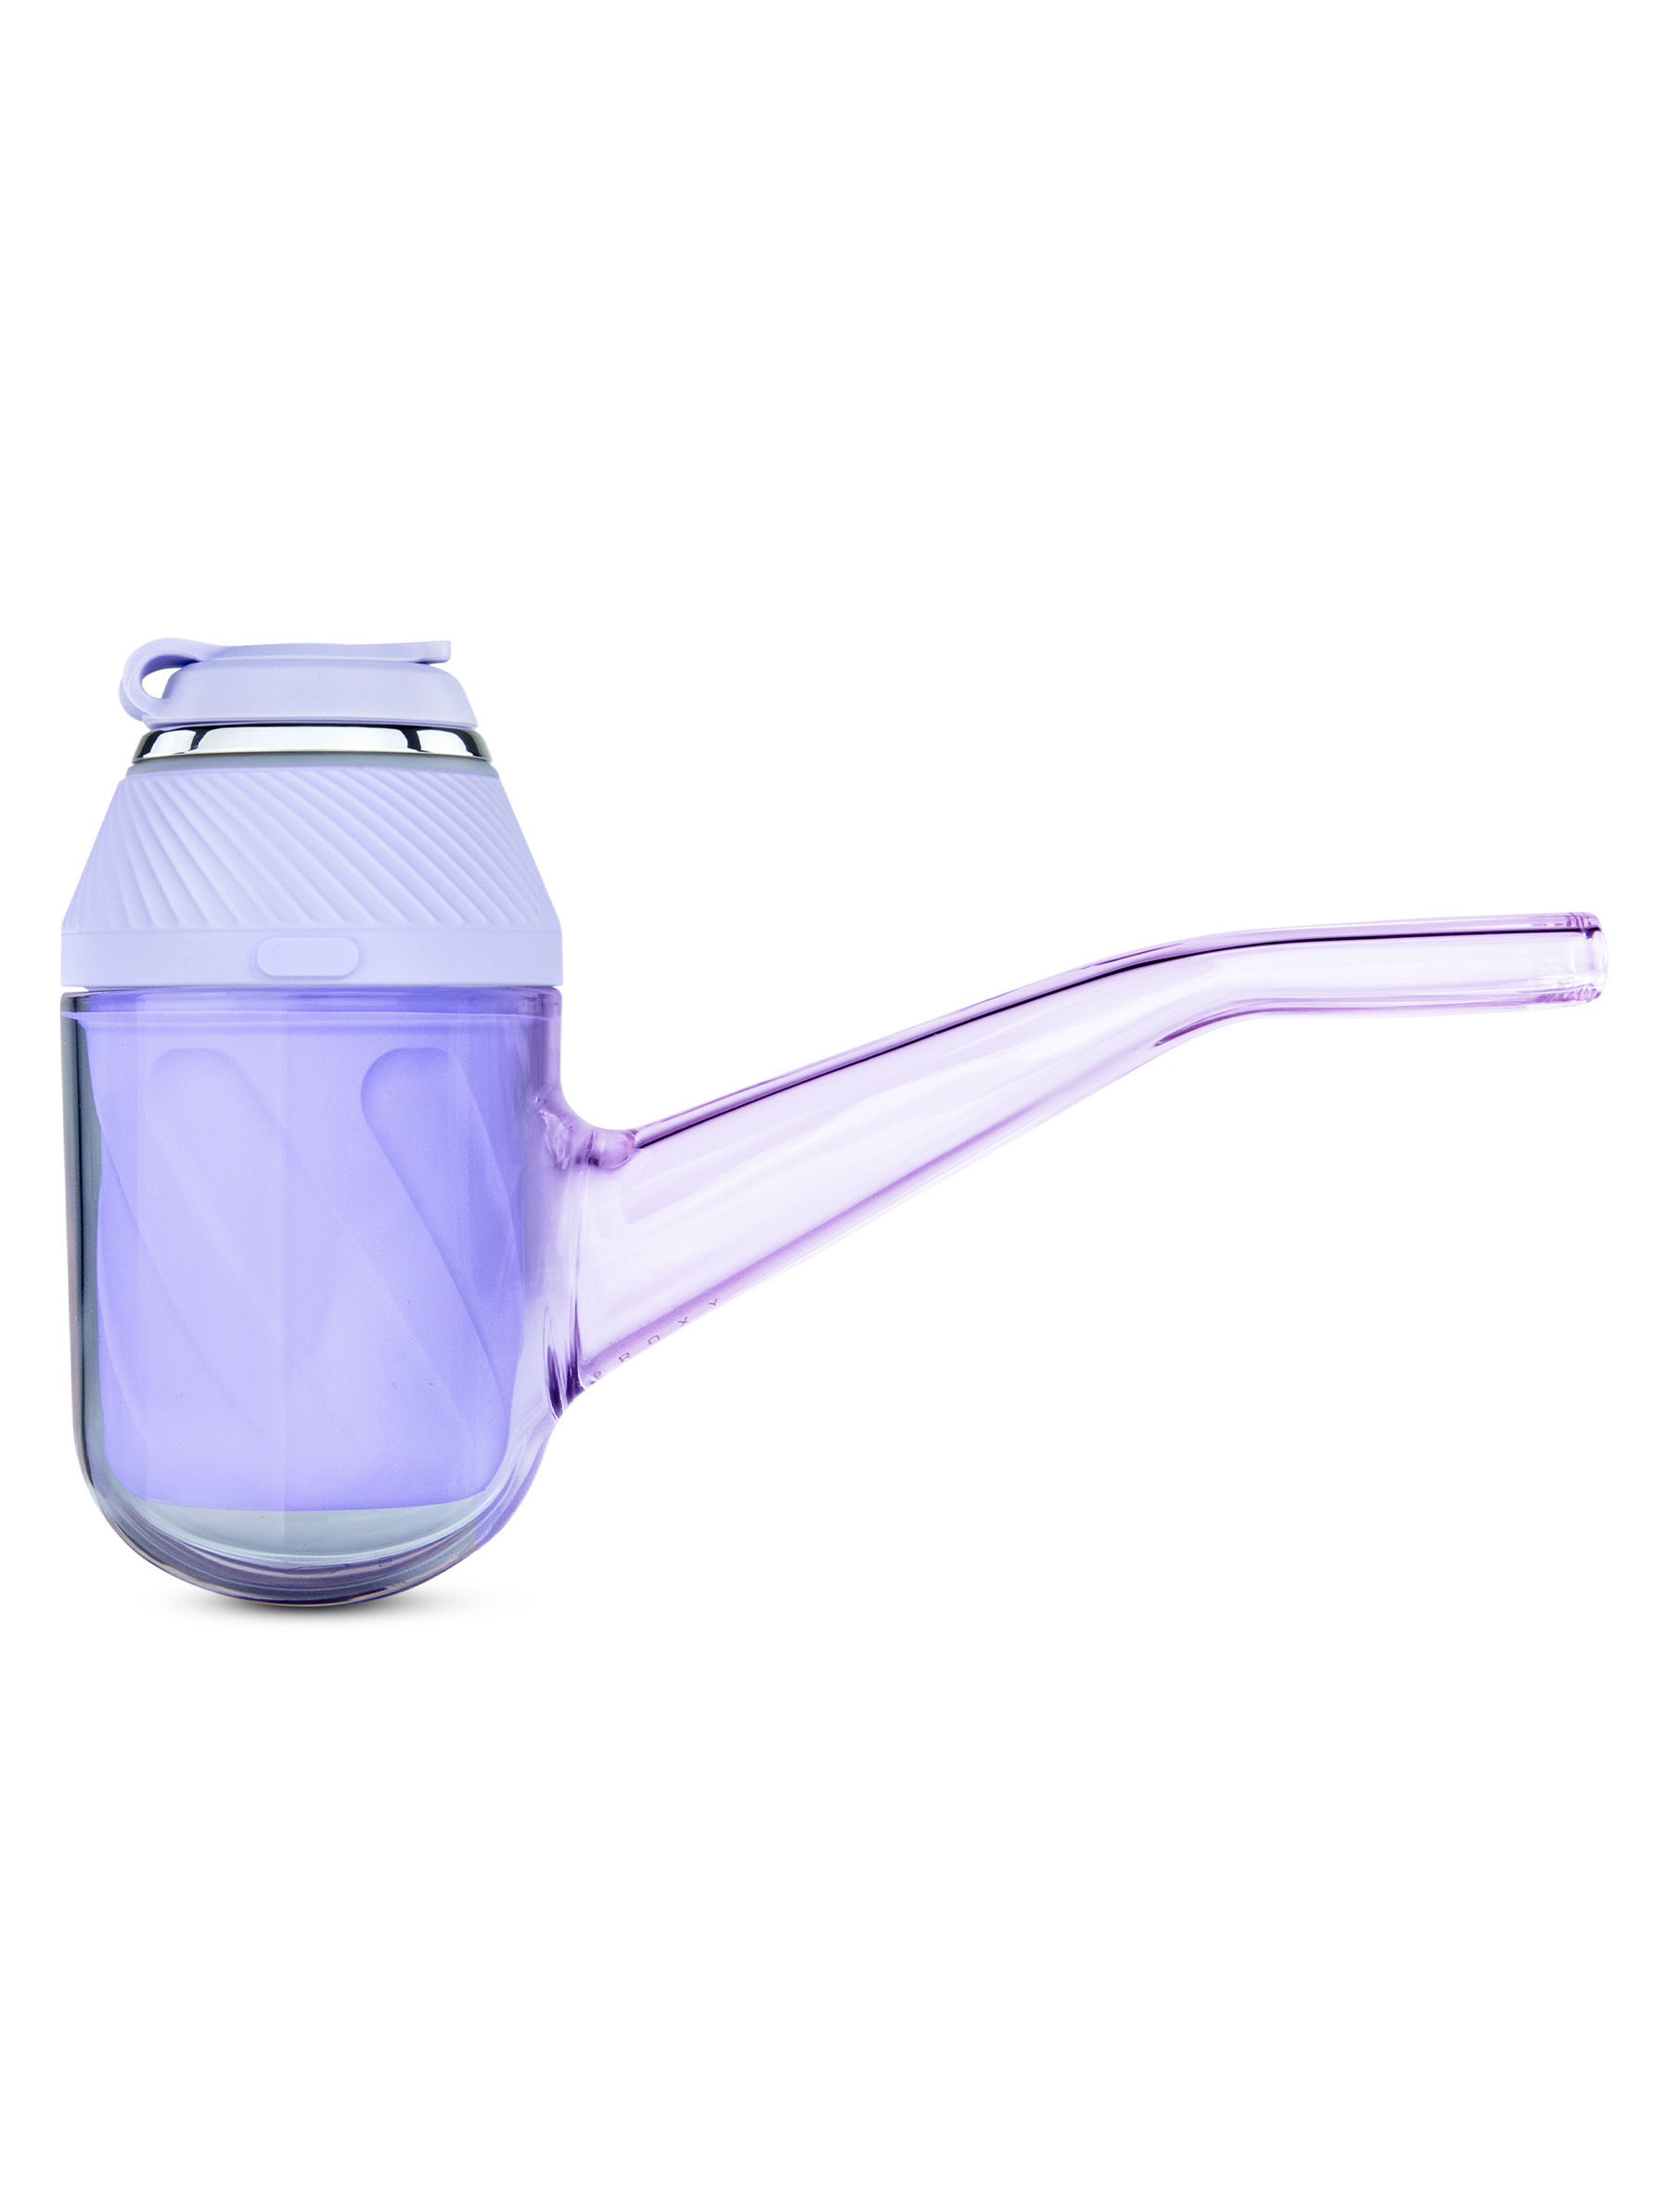 Side shot of purple Puffco Proxy kit with purple chamber